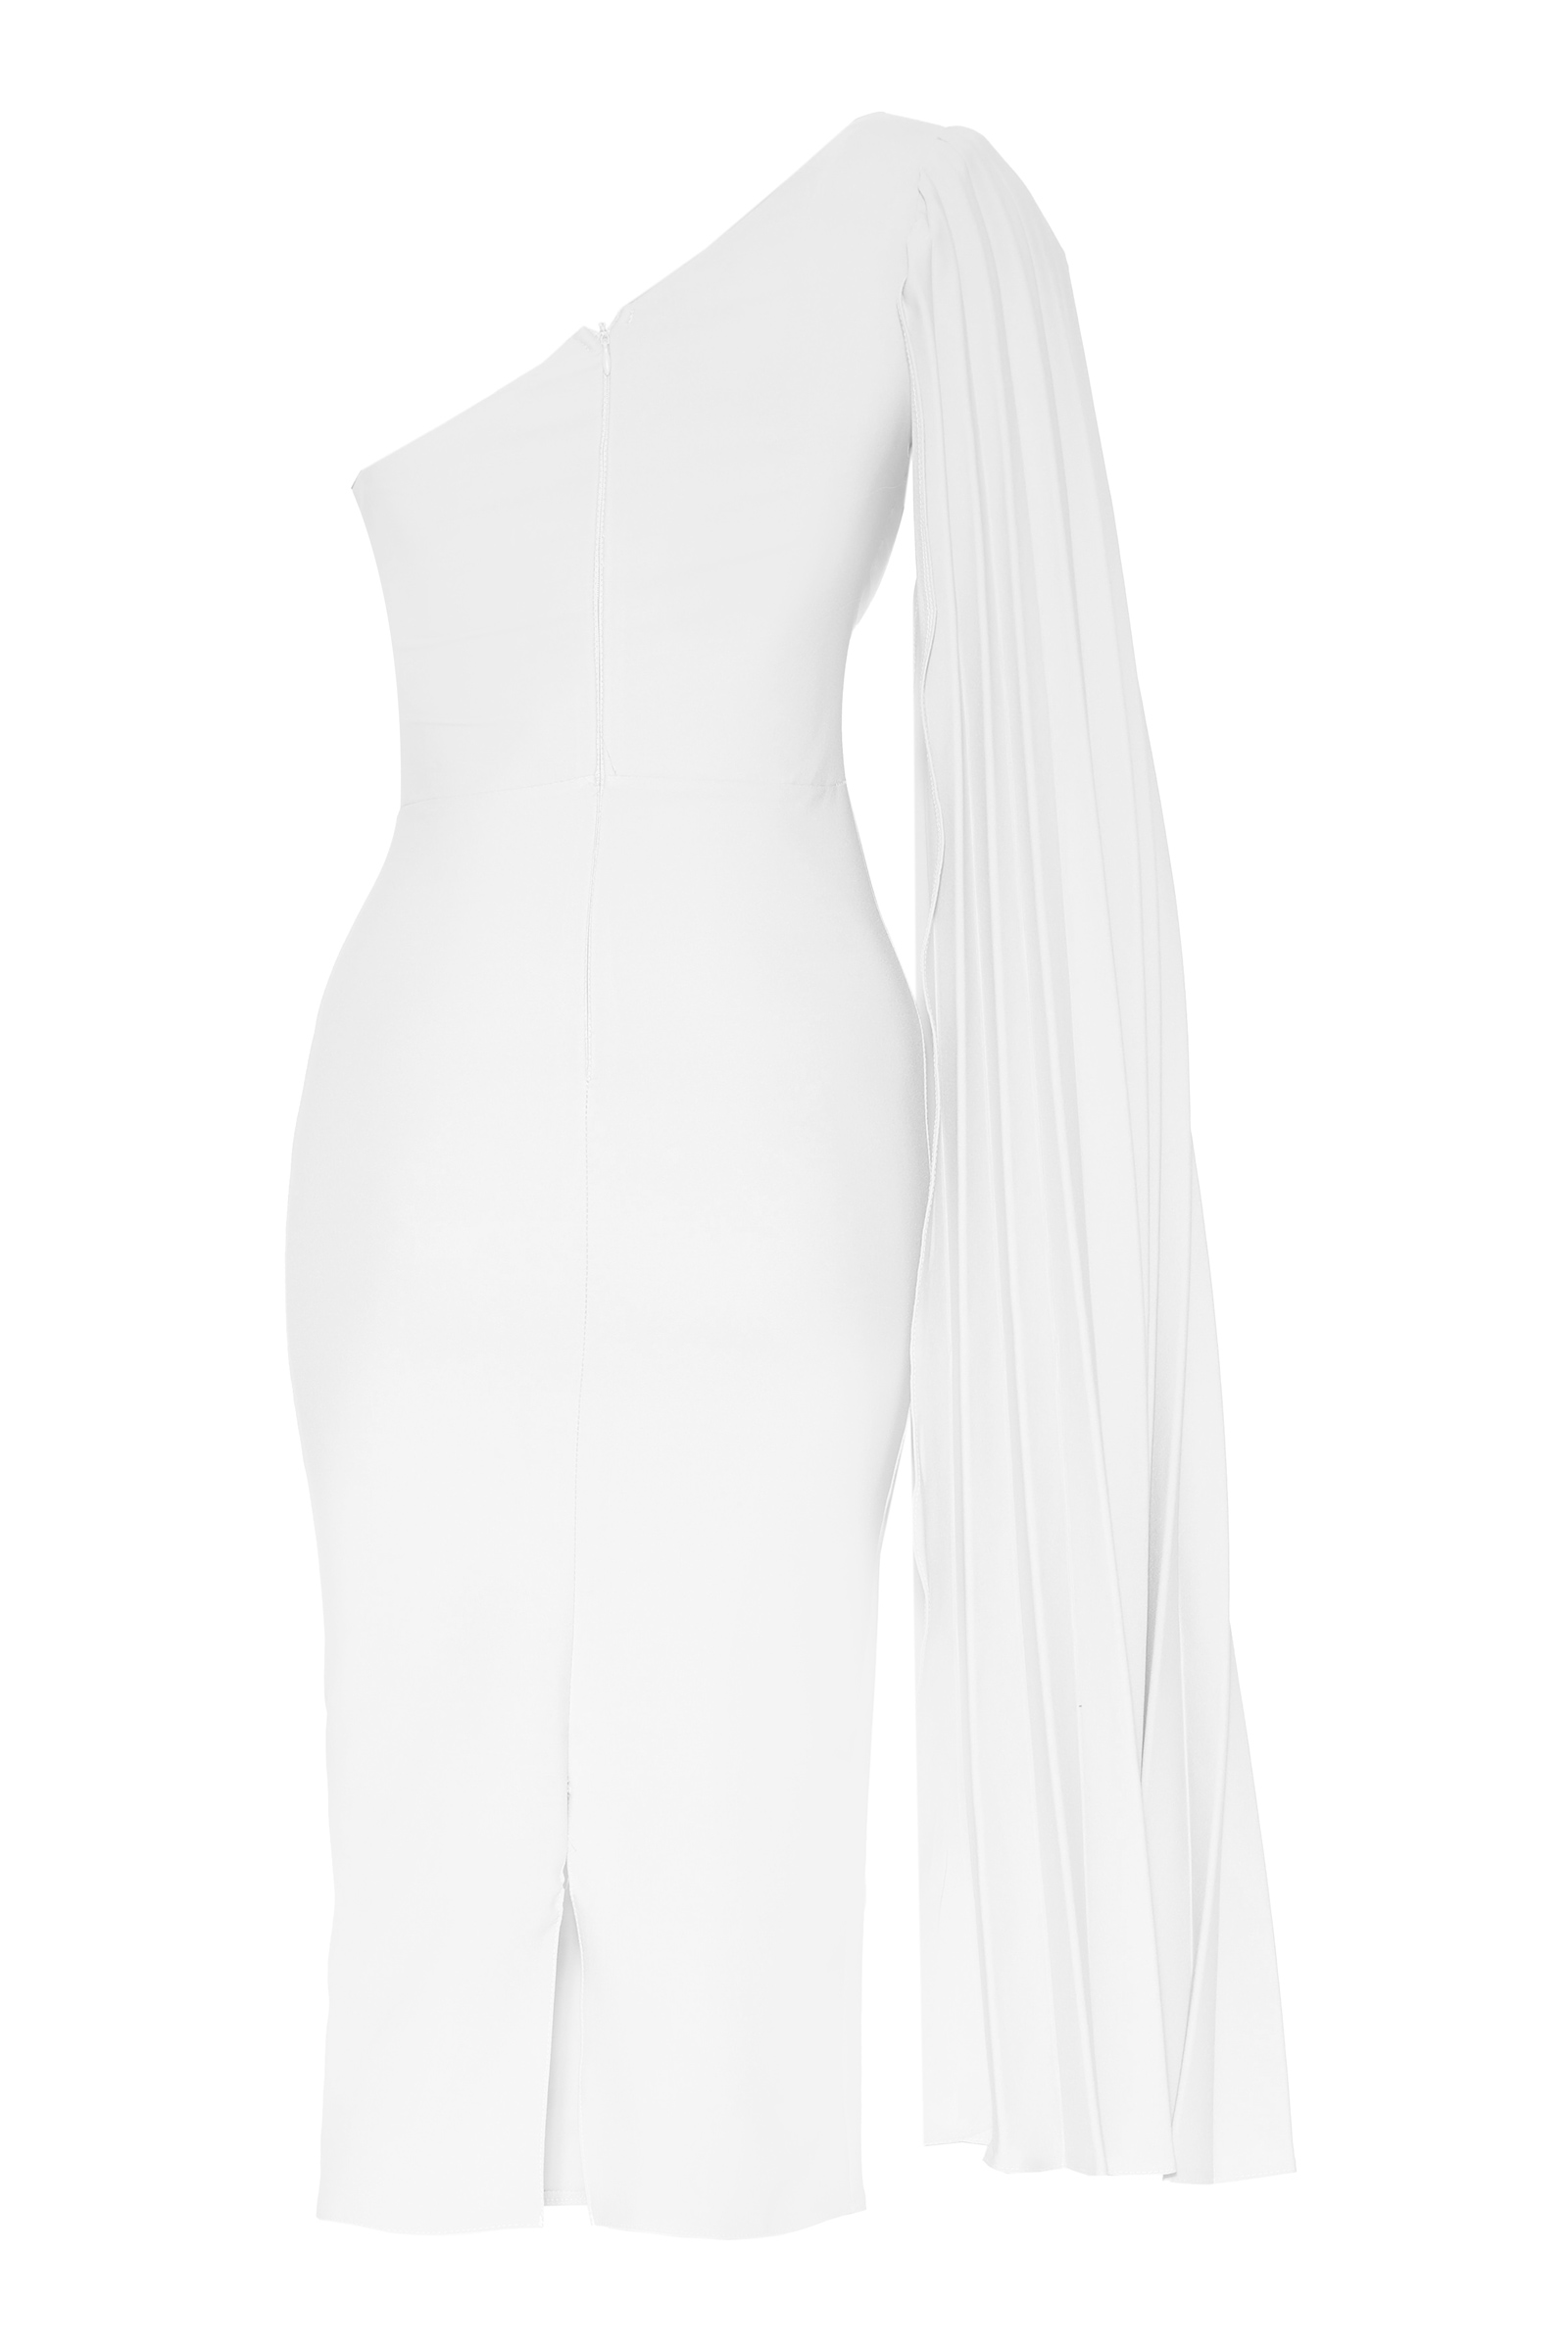 Beyaz Krep Tek Kol Kısa Elbise